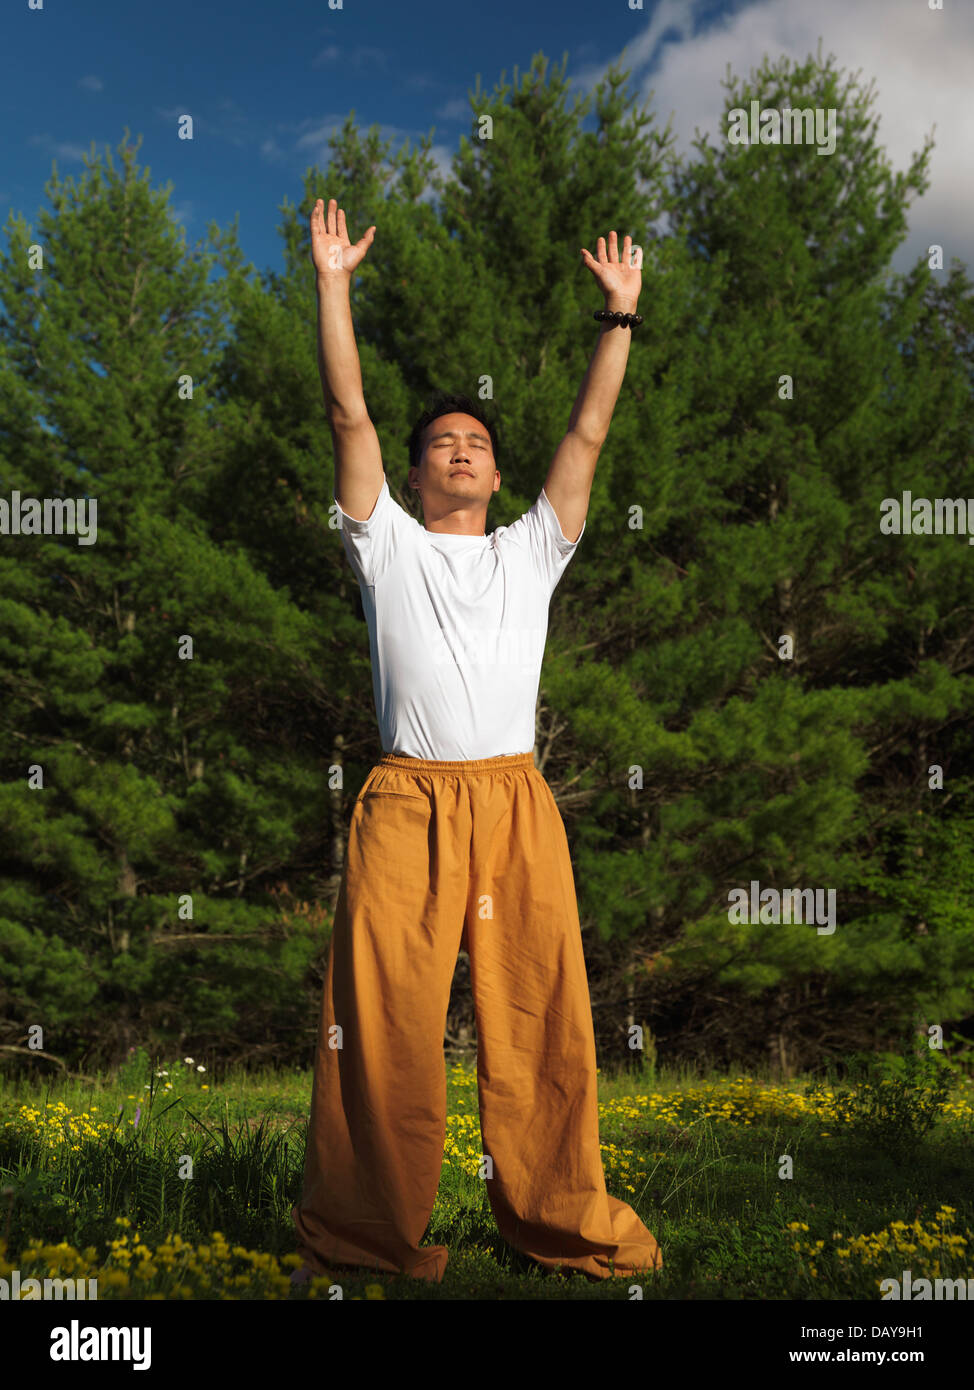 Lizenz verfügbar unter MaximImages.com - Porträt eines Mannes, der in der Natur bei Sonnenaufgang Qi Gong Meditation praktiziert. Qigong, Chi Kung, Chi Kung. Stockfoto